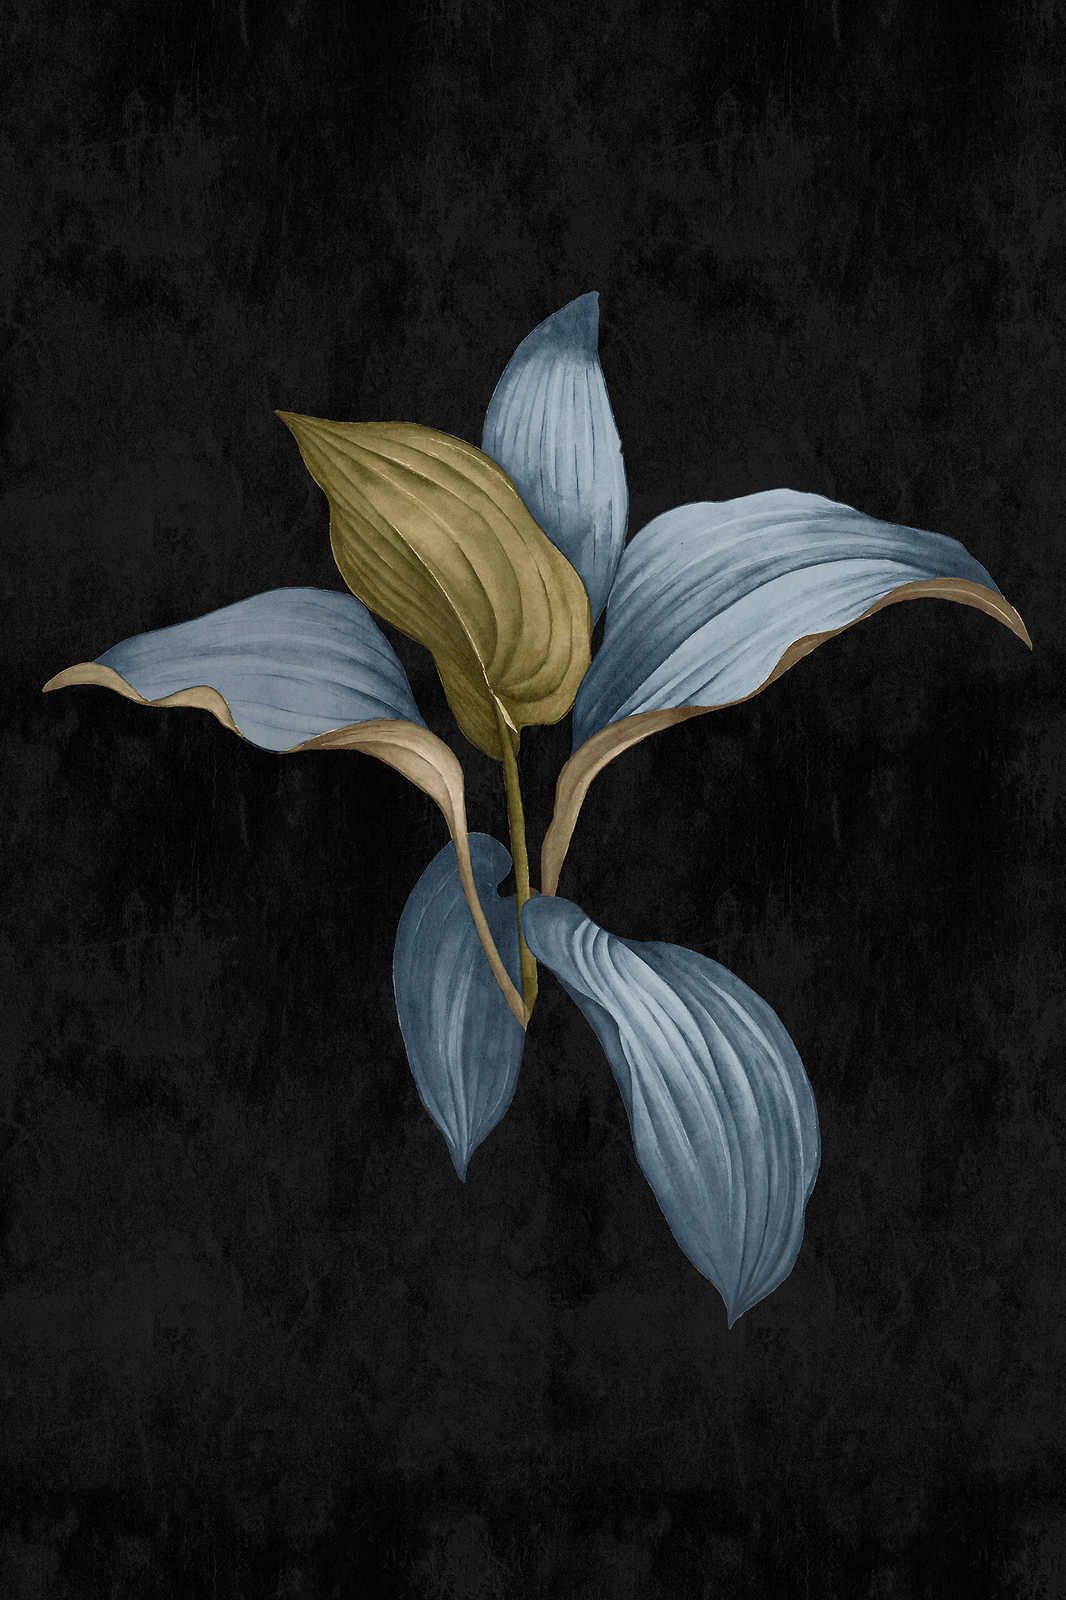             Fiji 3 - Dark Canvas Painting Botanical Design in Blue & Green - 0.60 m x 0.90 m
        